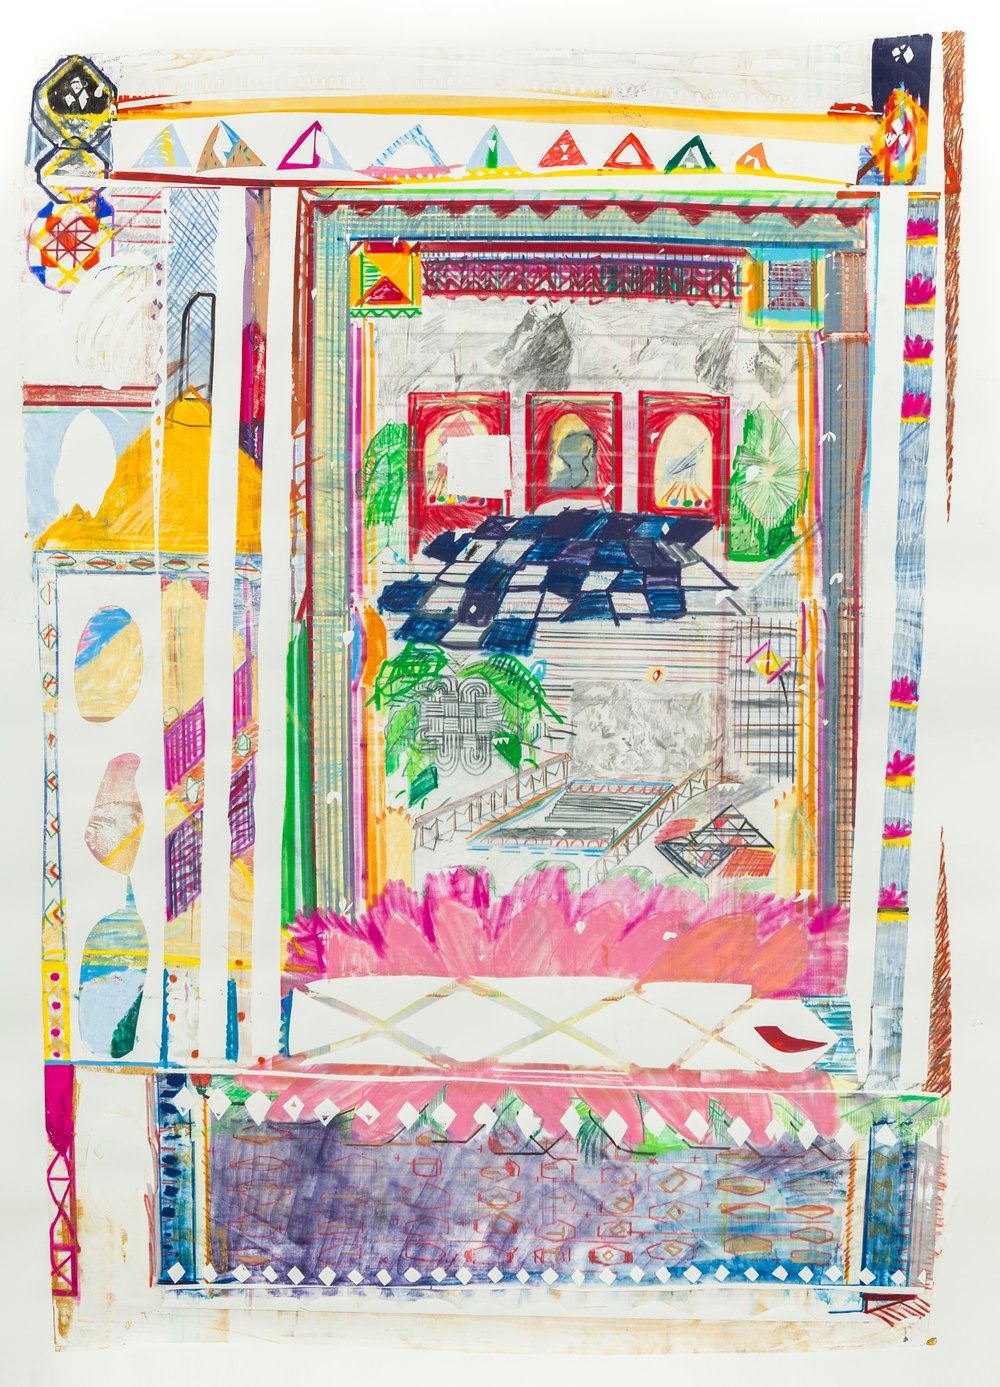   Sari series #1 , 38”x50”, Ink and watercolor on paper, 2014 